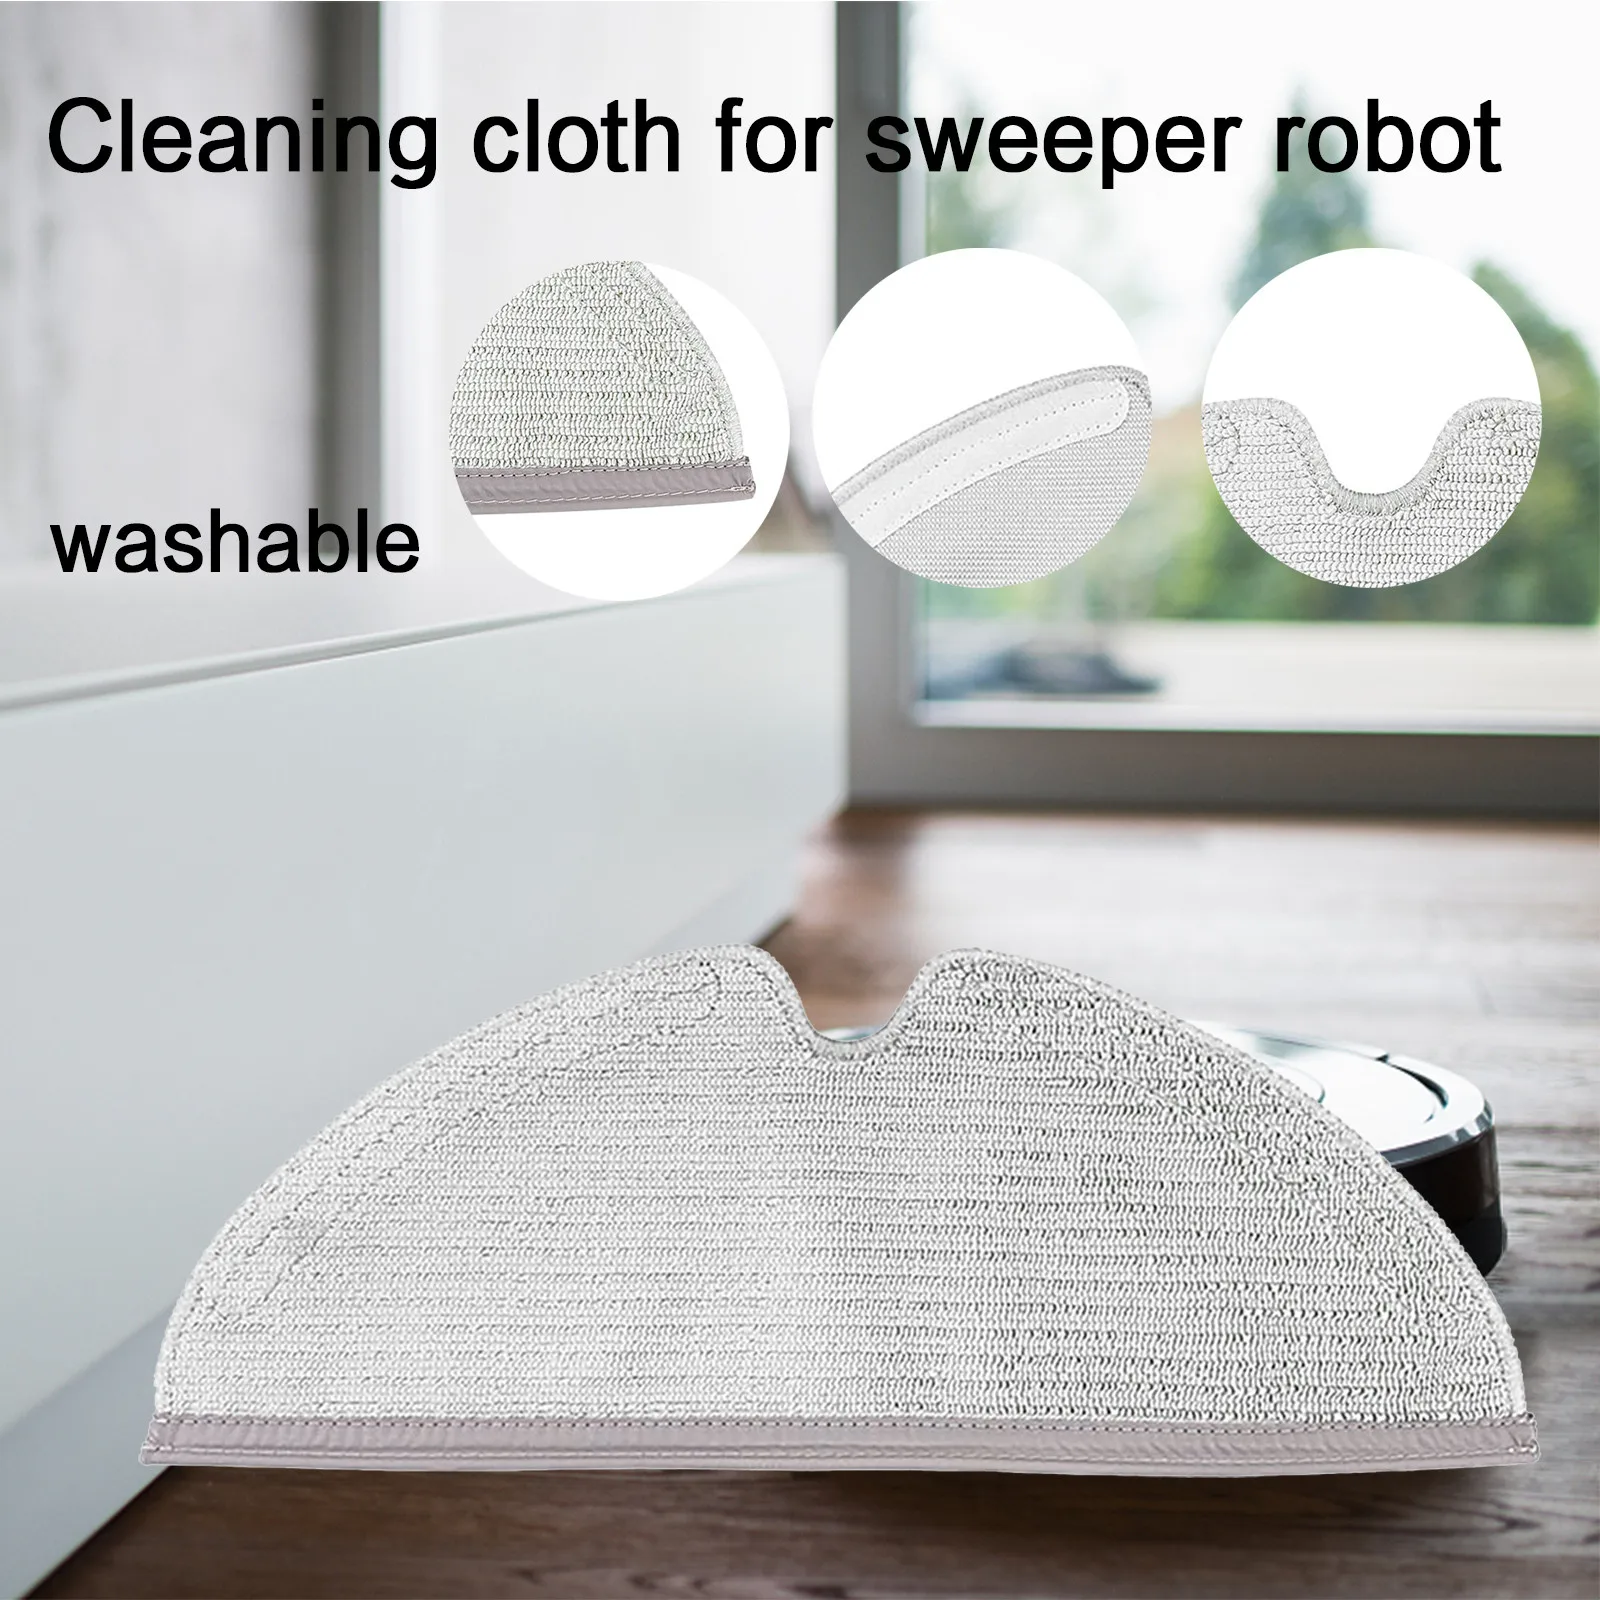 For Xiaomi Roborock S50 S55 S5 S60 Sweeping Robot Parts Cleaning Cloth Parts For Sweeping Robot Accessories T7 Series#p4